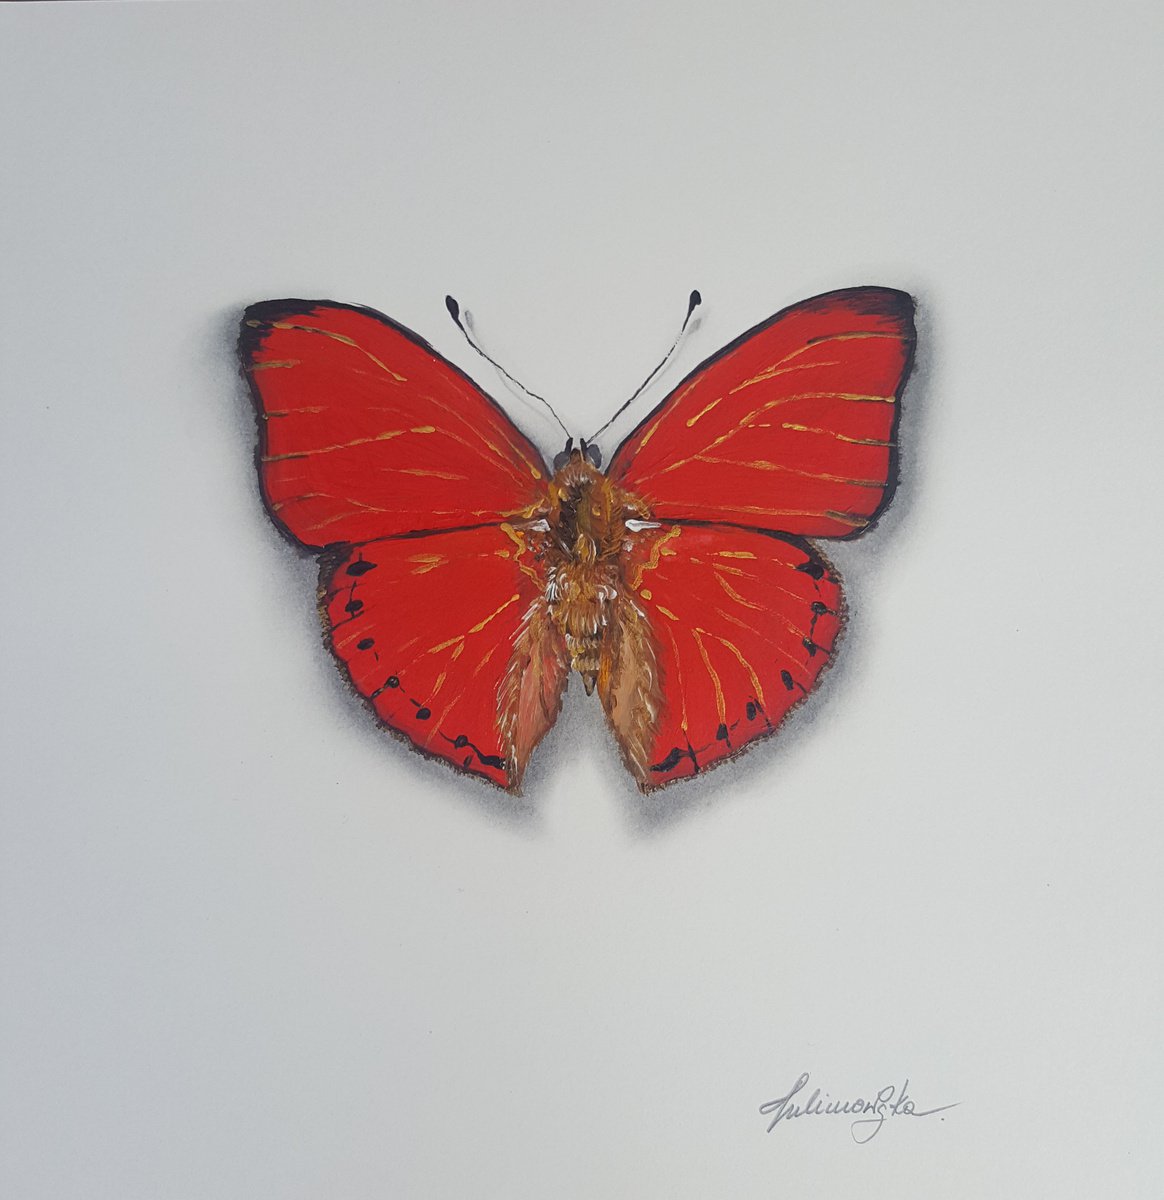 Butterfly Collection - Cymothoe Sangaris by Maja Tulimowska - Chmielewska